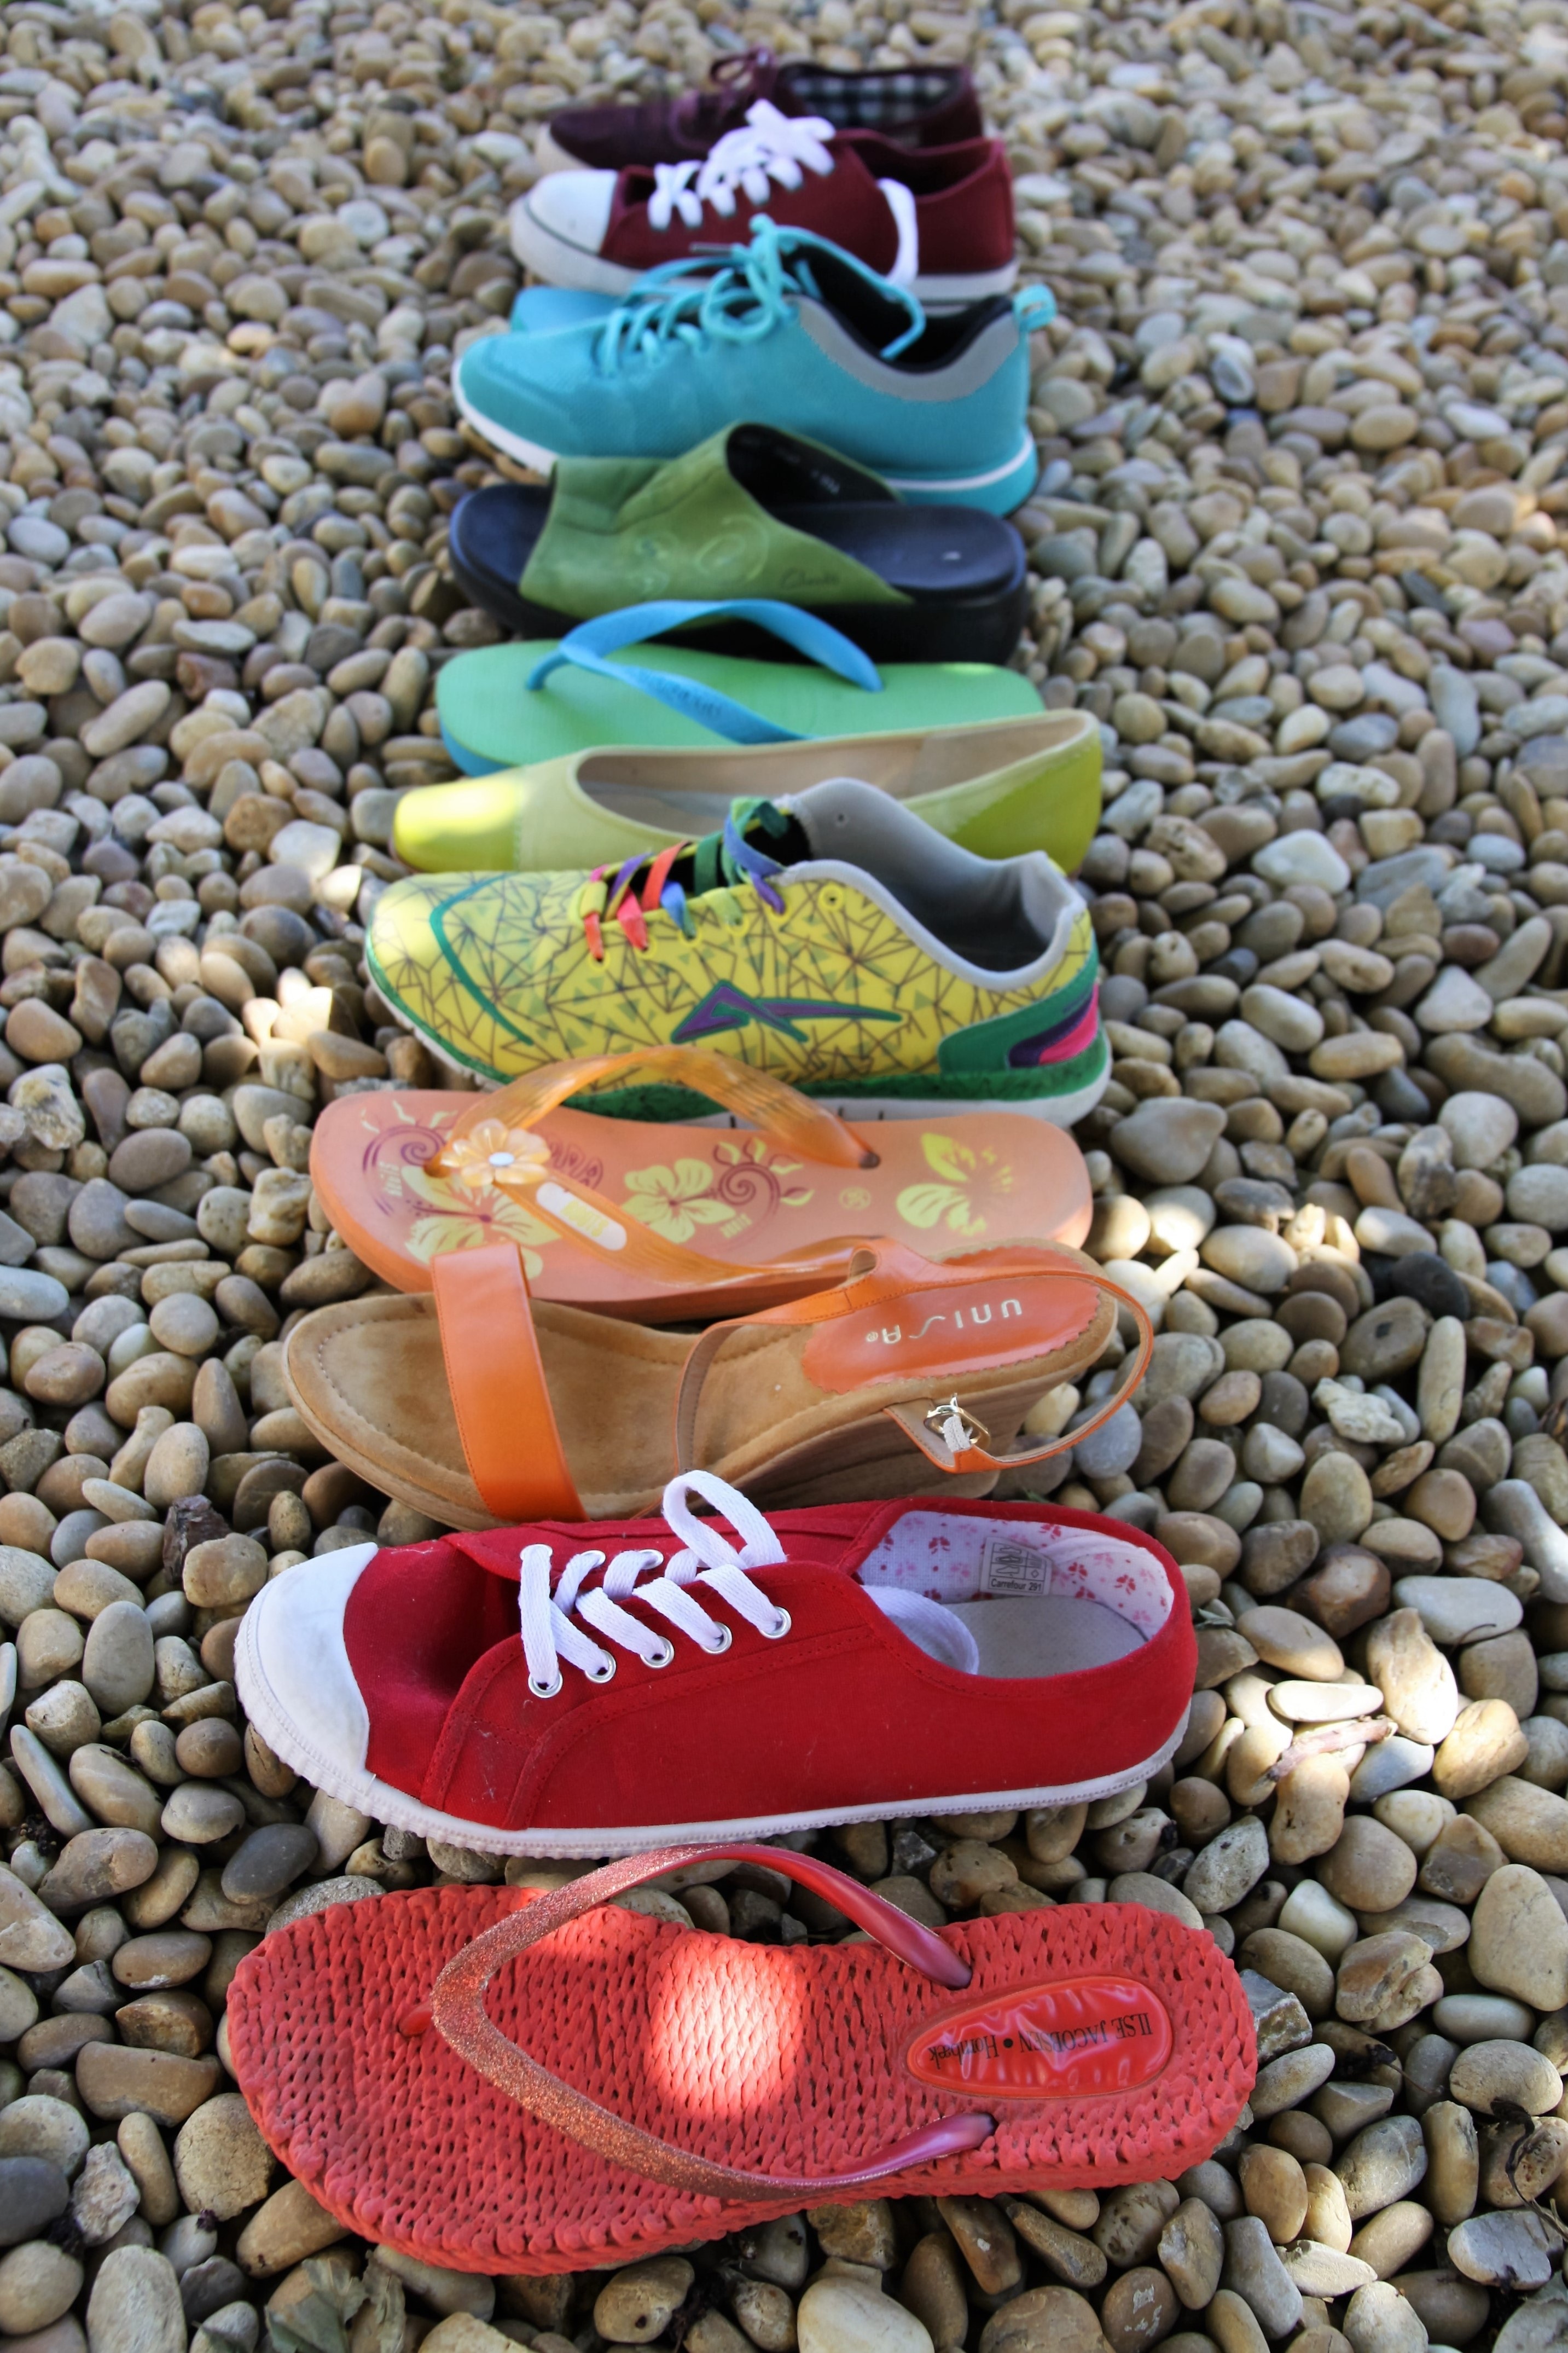 unpaired sneakers sandals and flip flops